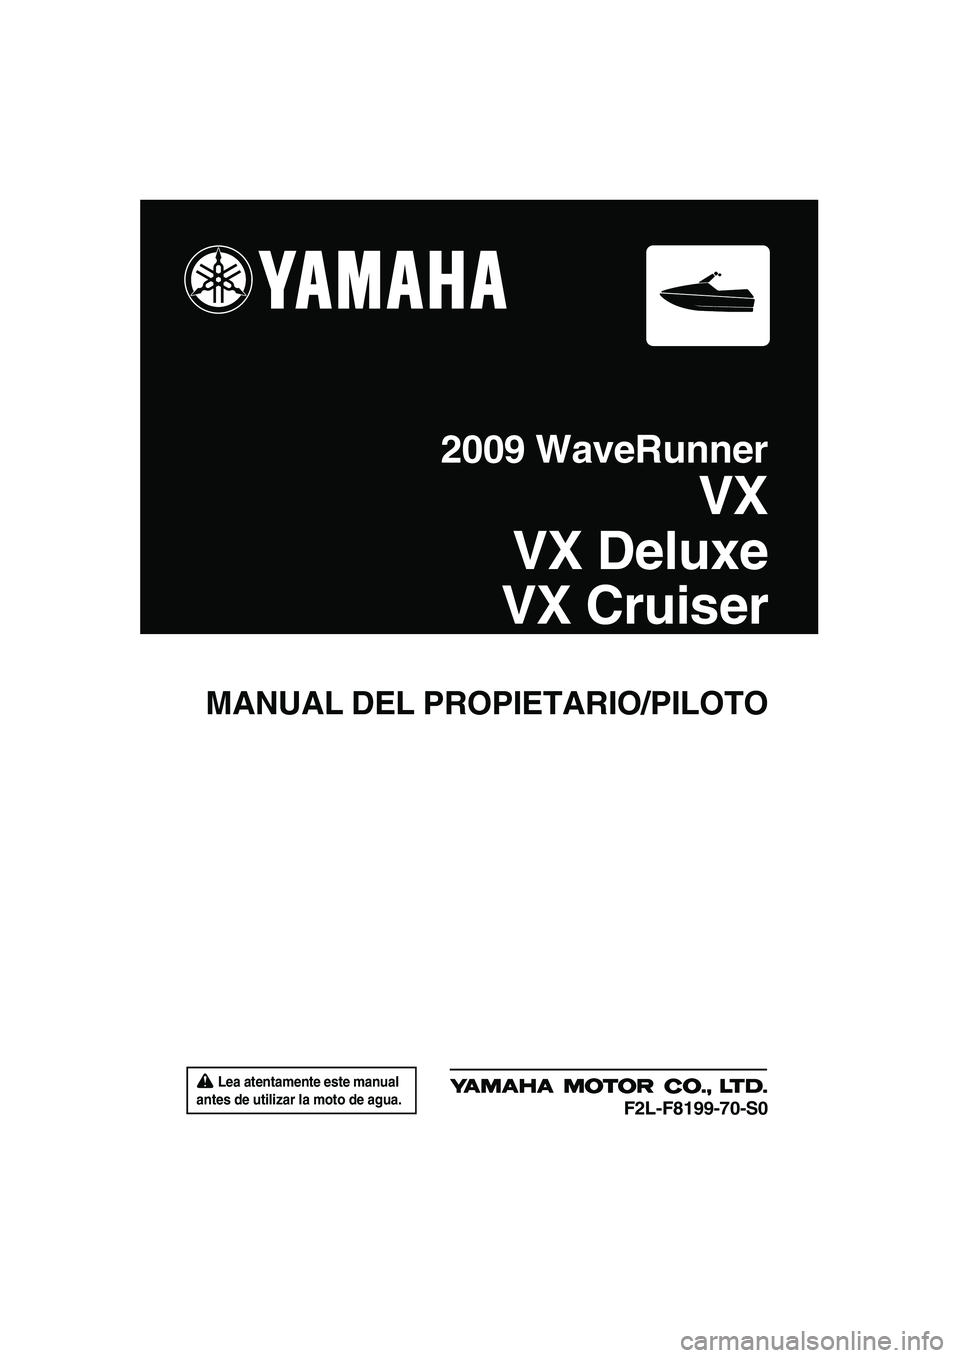 YAMAHA VX 2009  Manuale de Empleo (in Spanish)  Lea atentamente este manual 
antes de utilizar la moto de agua.
MANUAL DEL PROPIETARIO/PILOTO
2009 WaveRunner
VX
VX Deluxe
VX Cruiser
F2L-F8199-70-S0
UF2L70S0.book  Page 1  Tuesday, June 24, 2008  9: